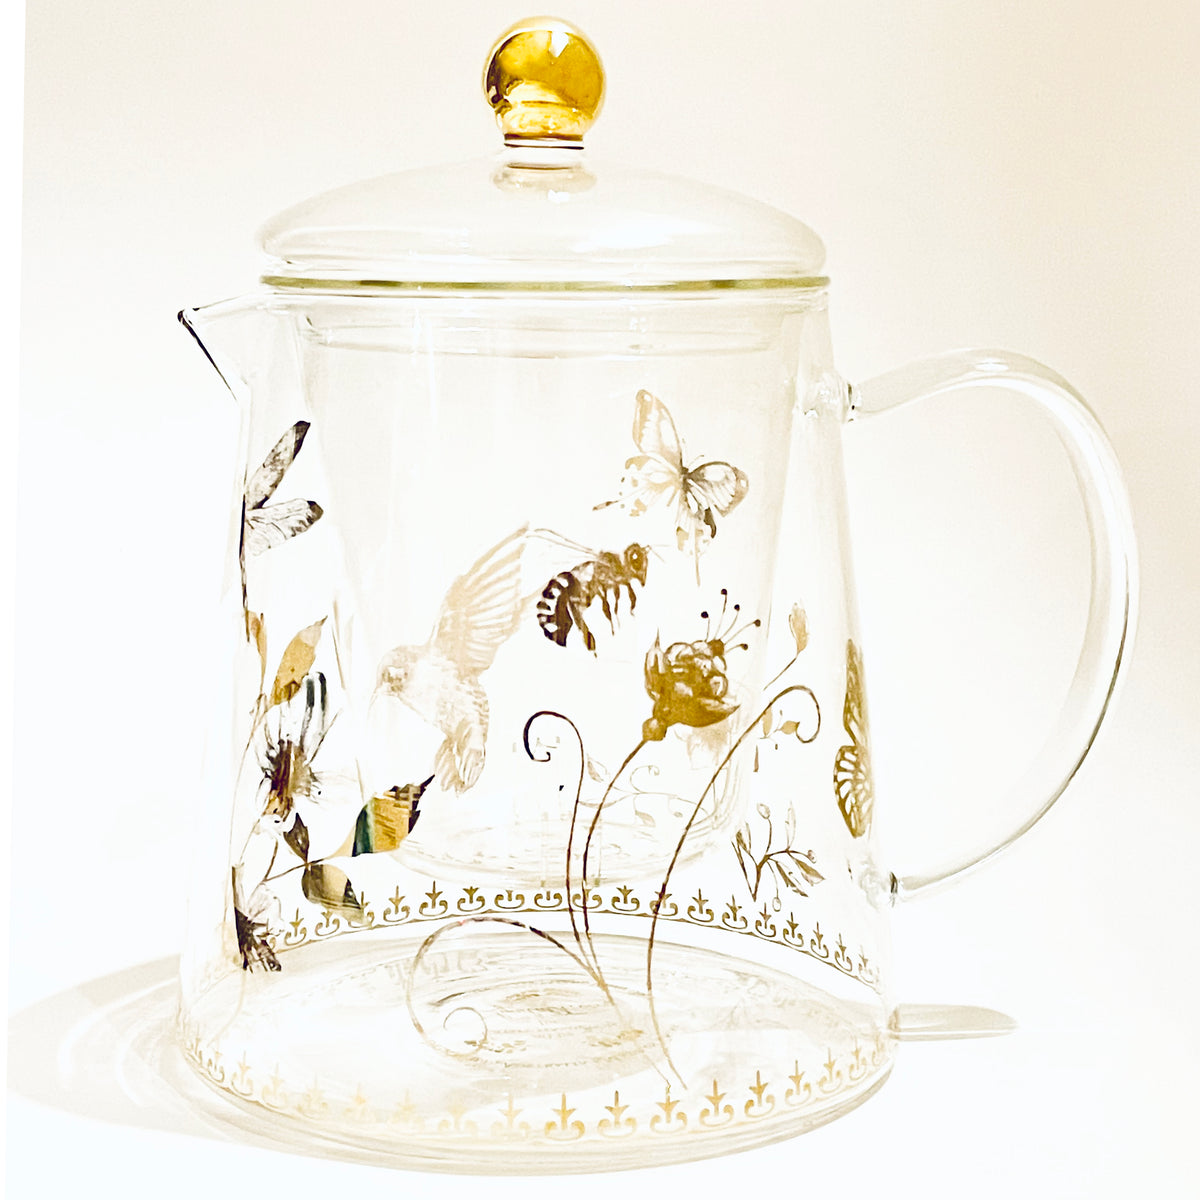 Glass Teapot in Garden theme – 800mL